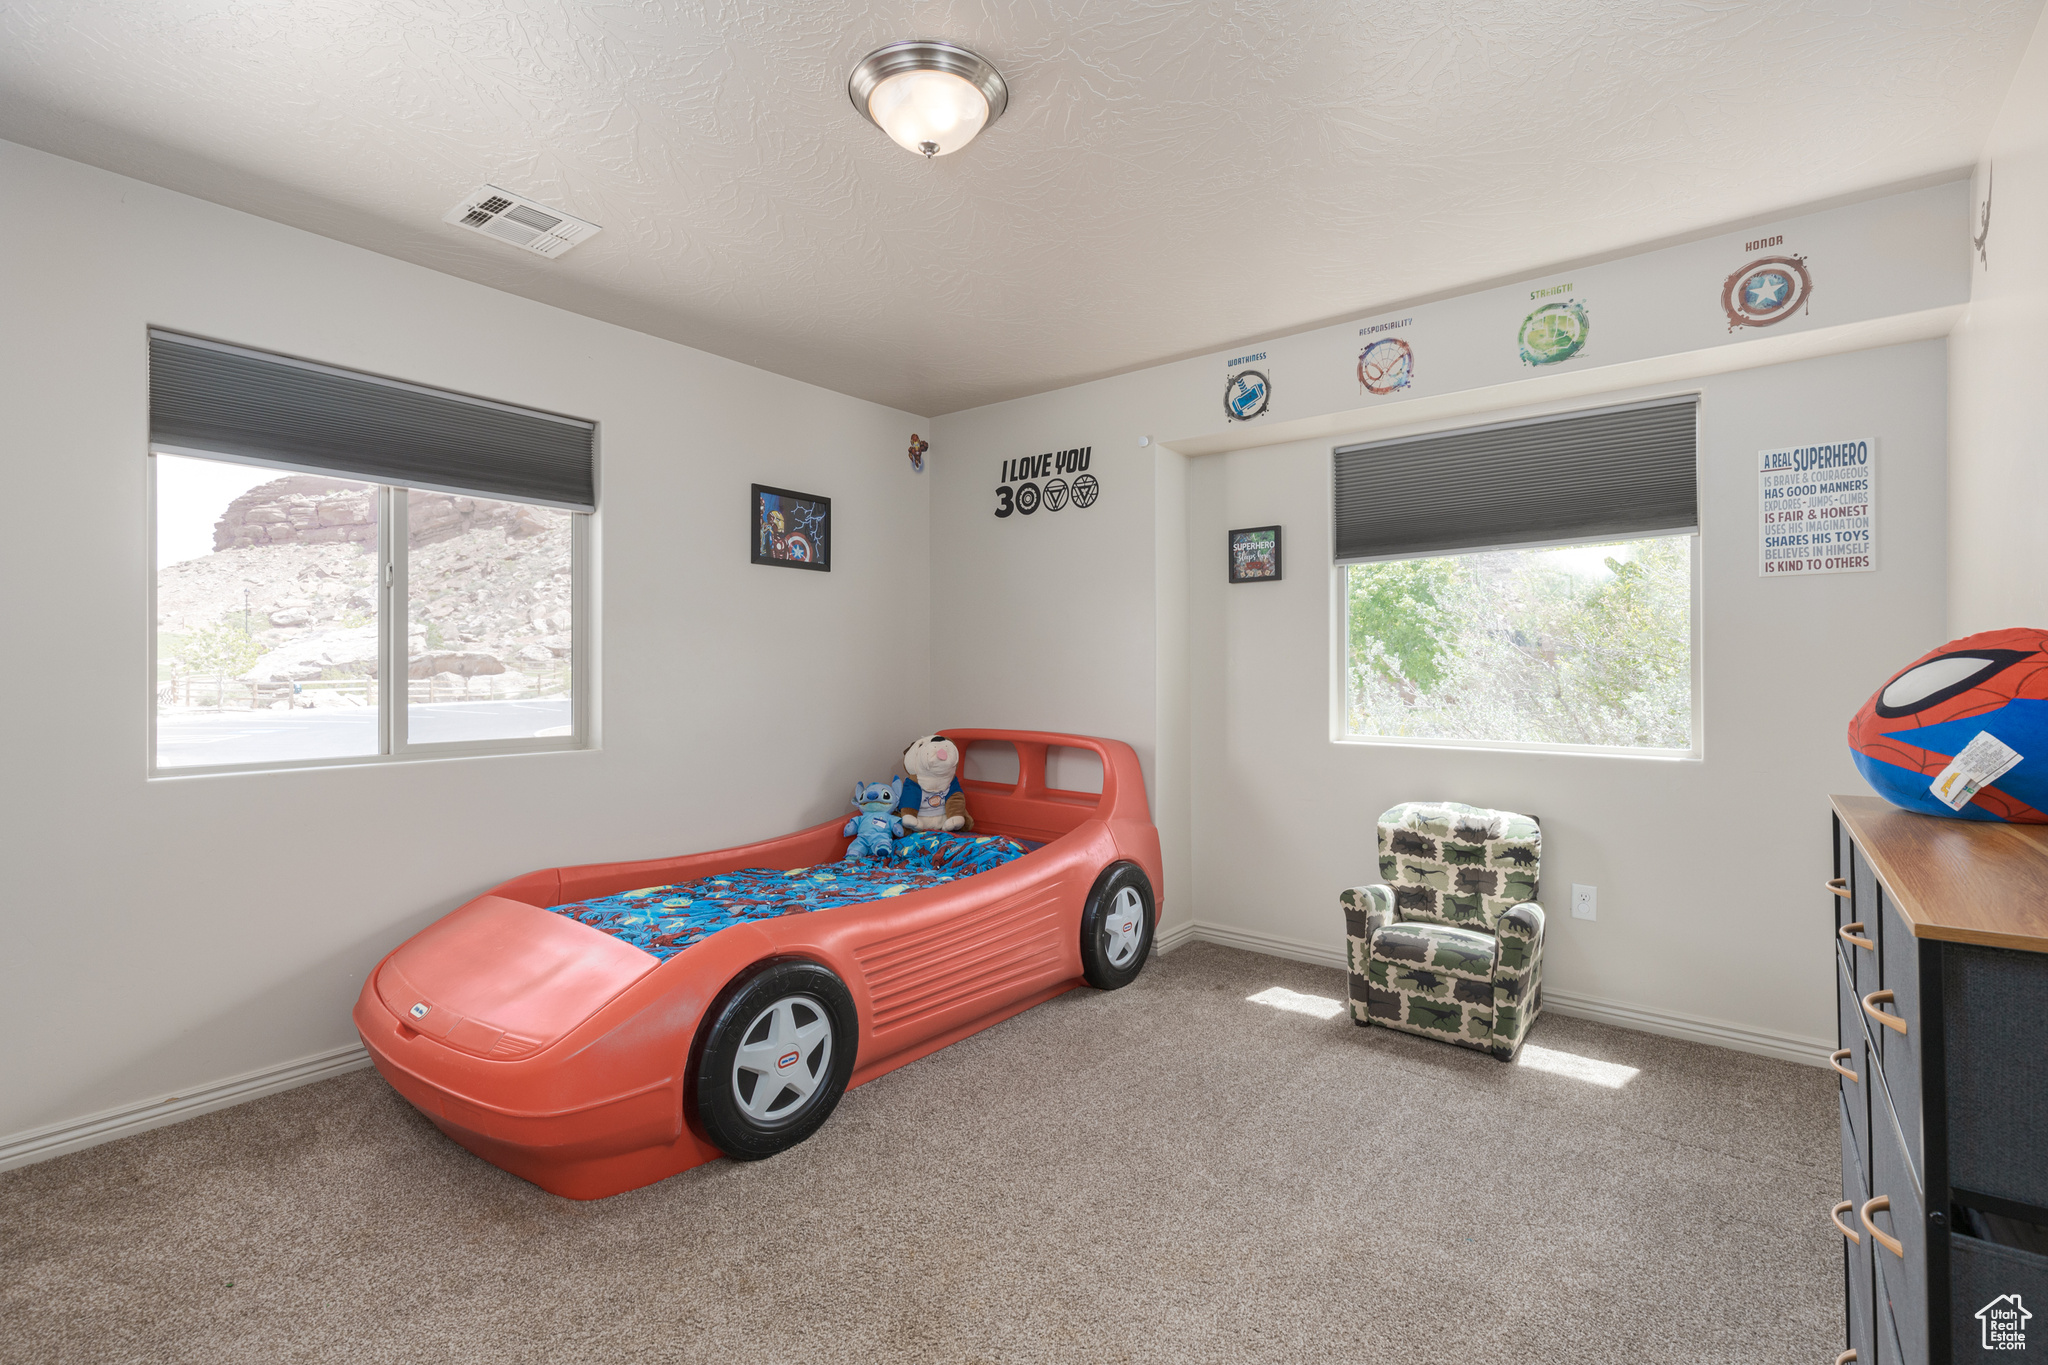 Bedroom with carpet floors